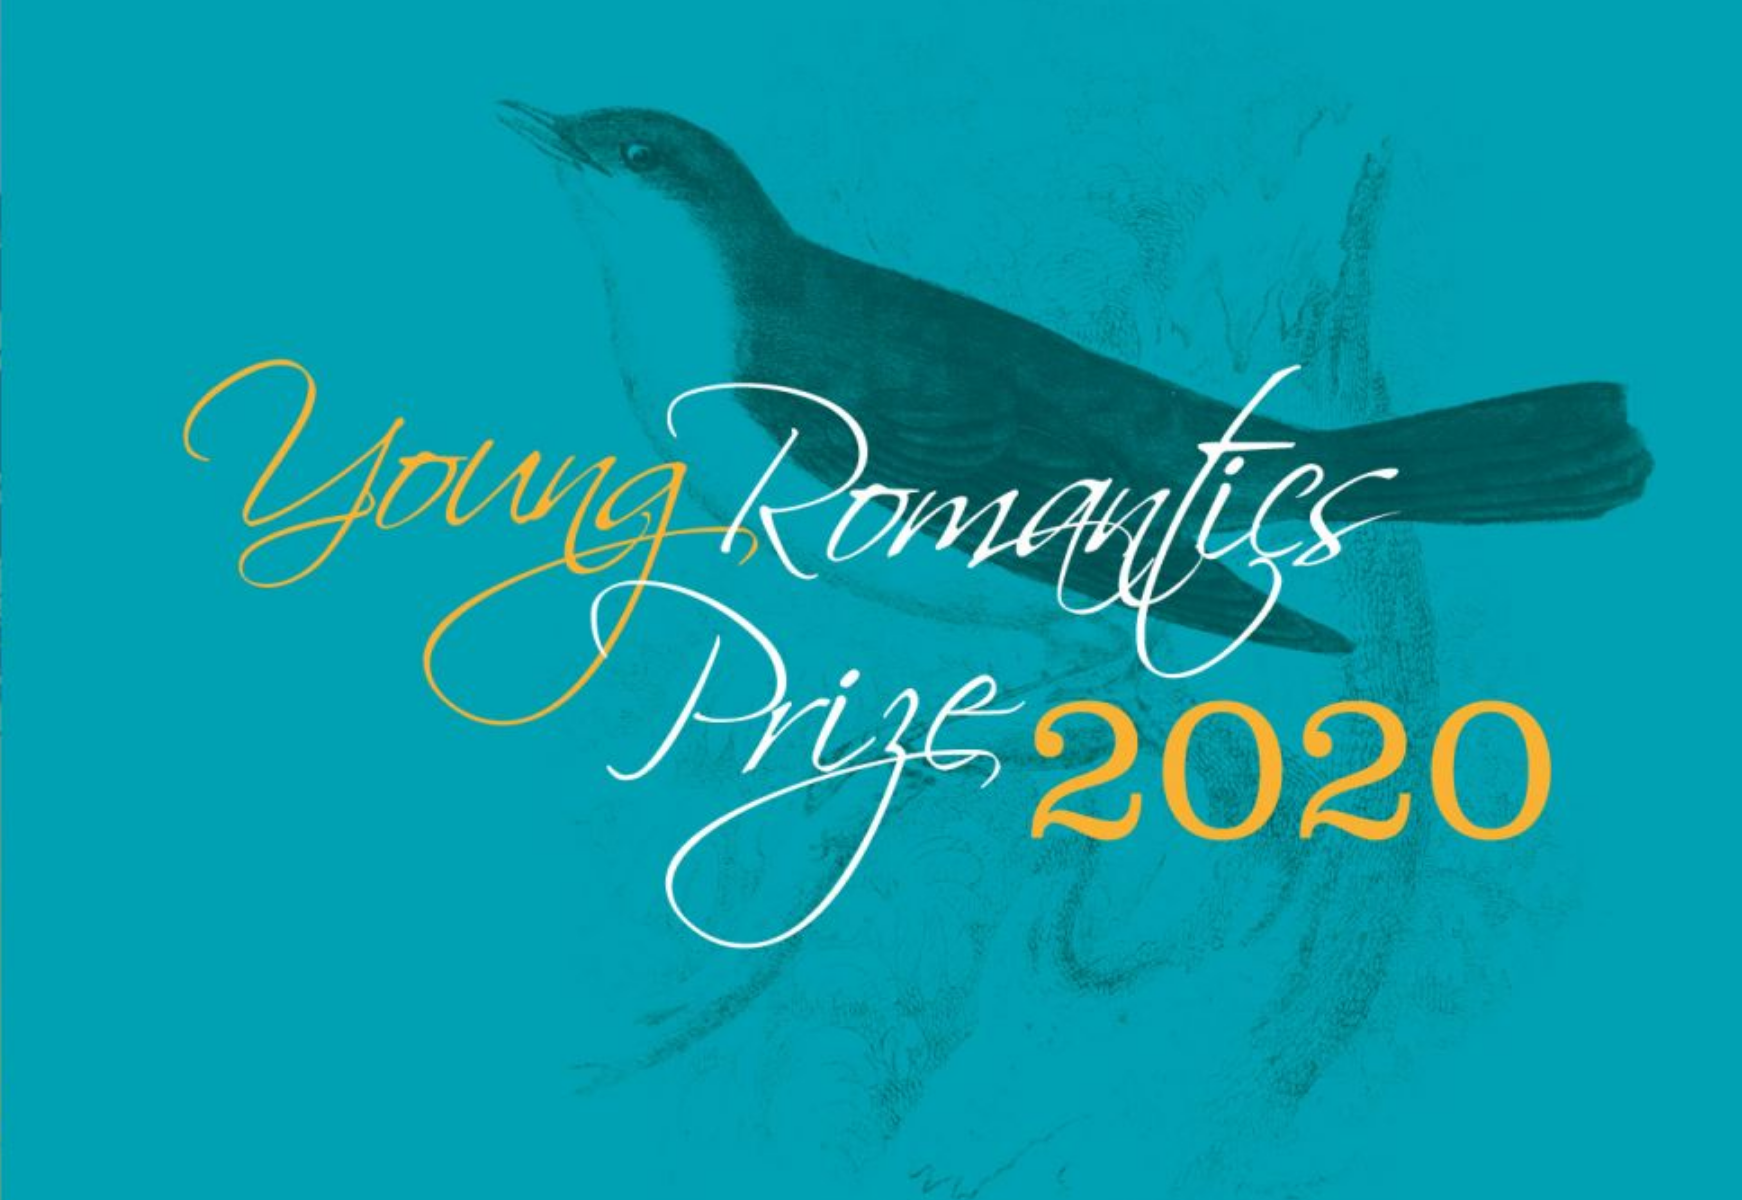 Young Romantics Prize 2020